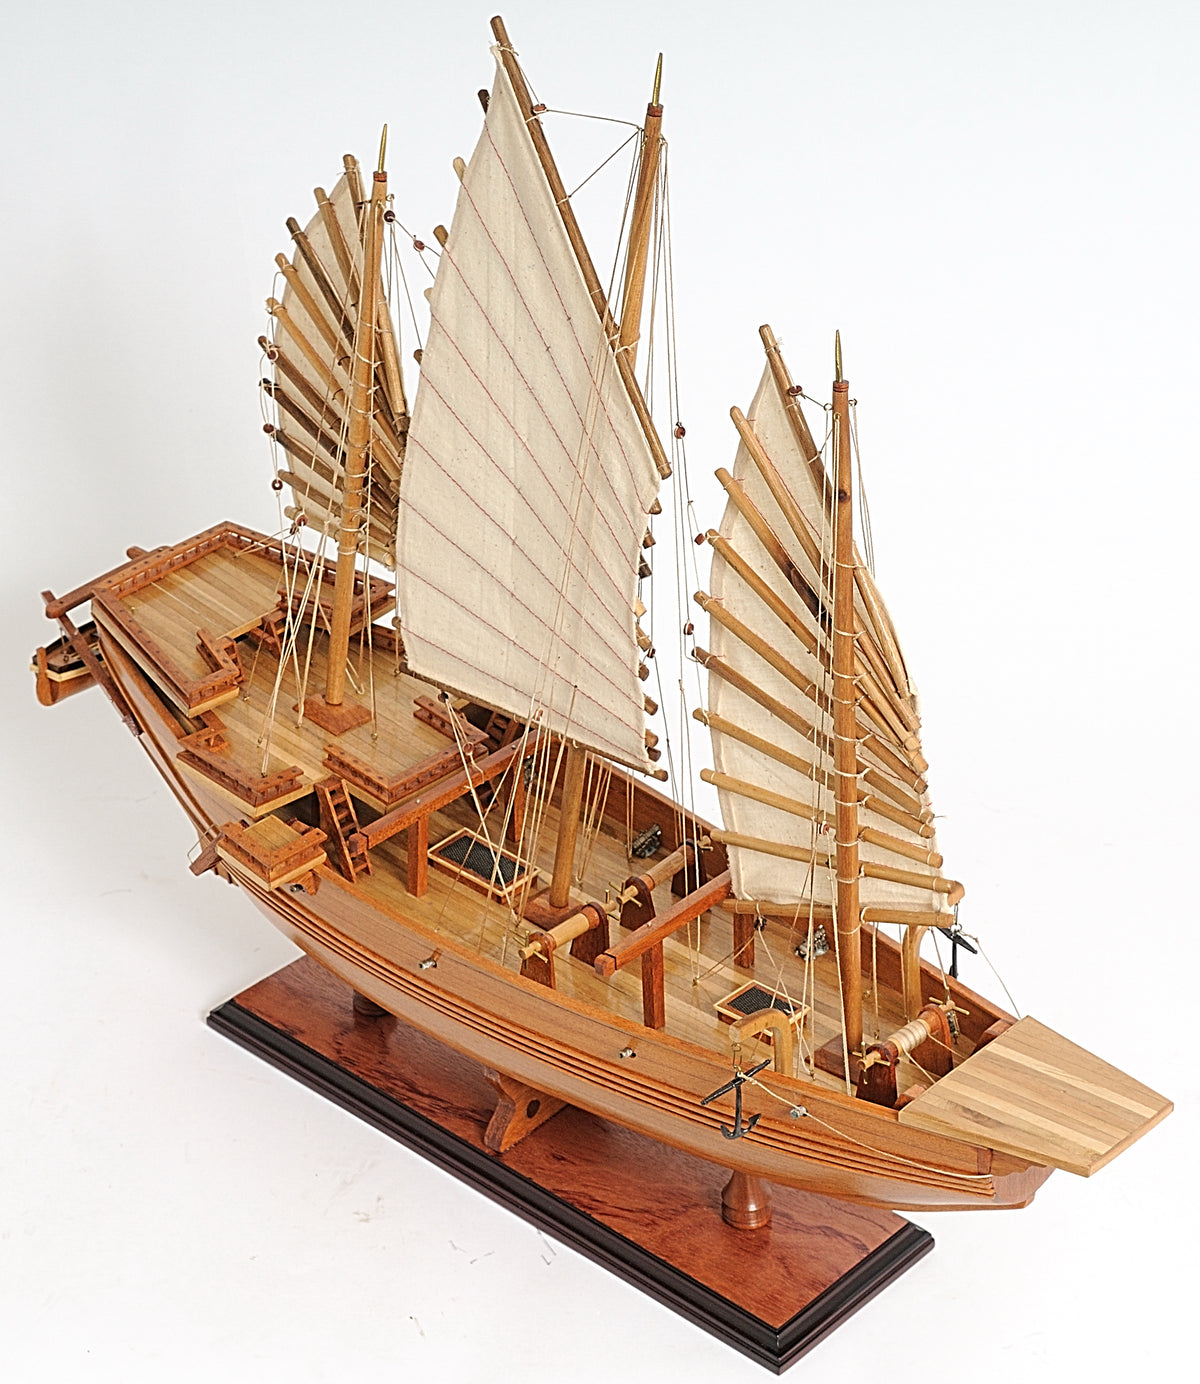 Chinese Junk Model Boat,model ship,Adley & Company Inc.